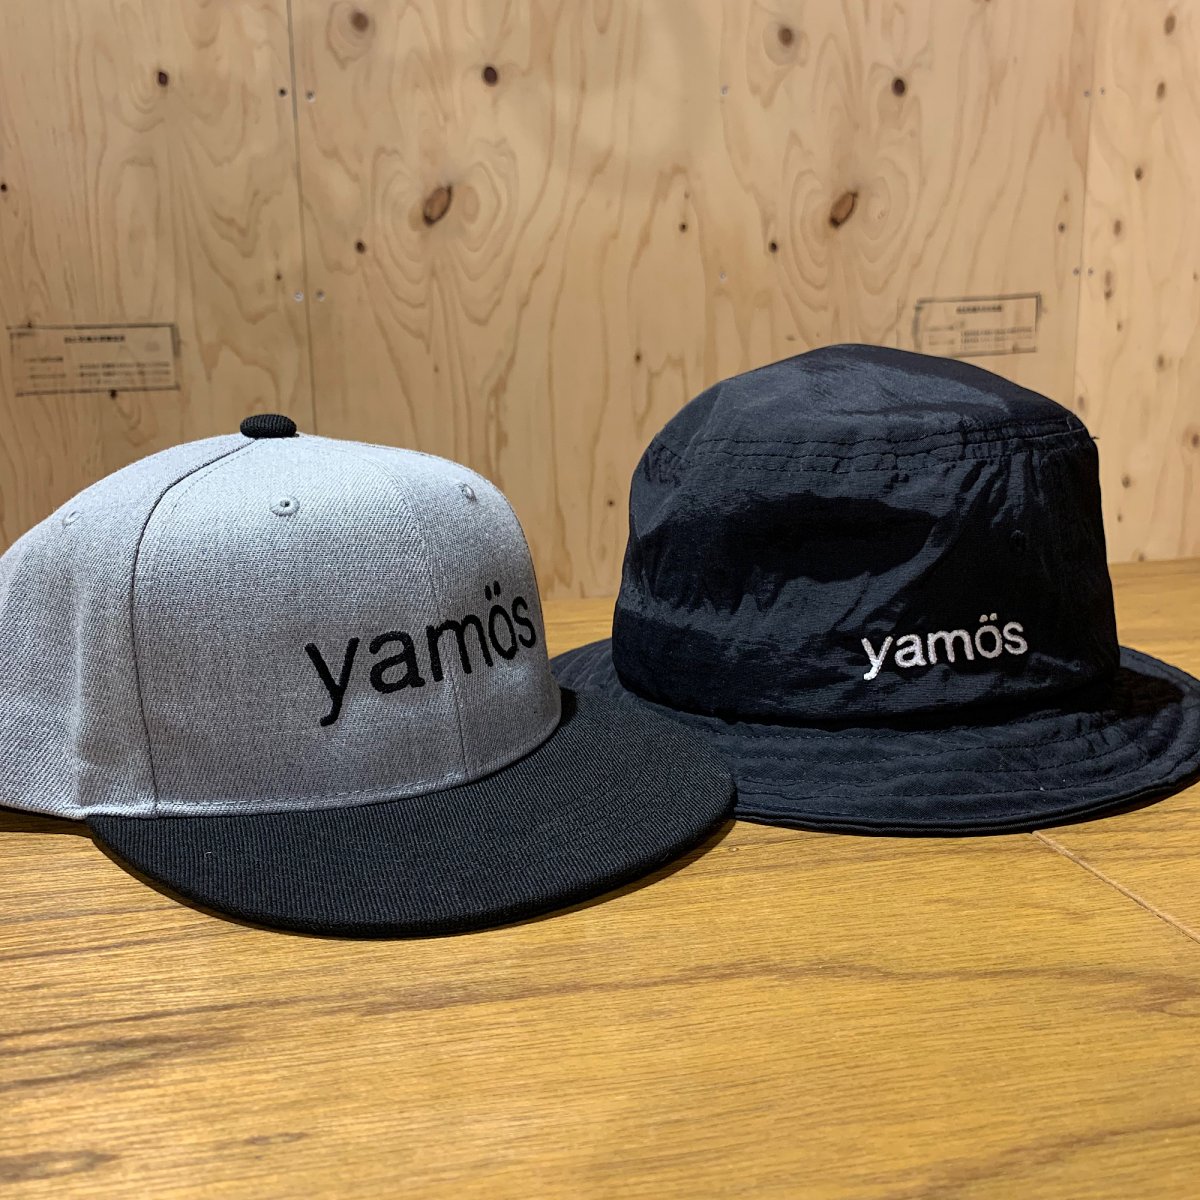 yamosCAP/HAT